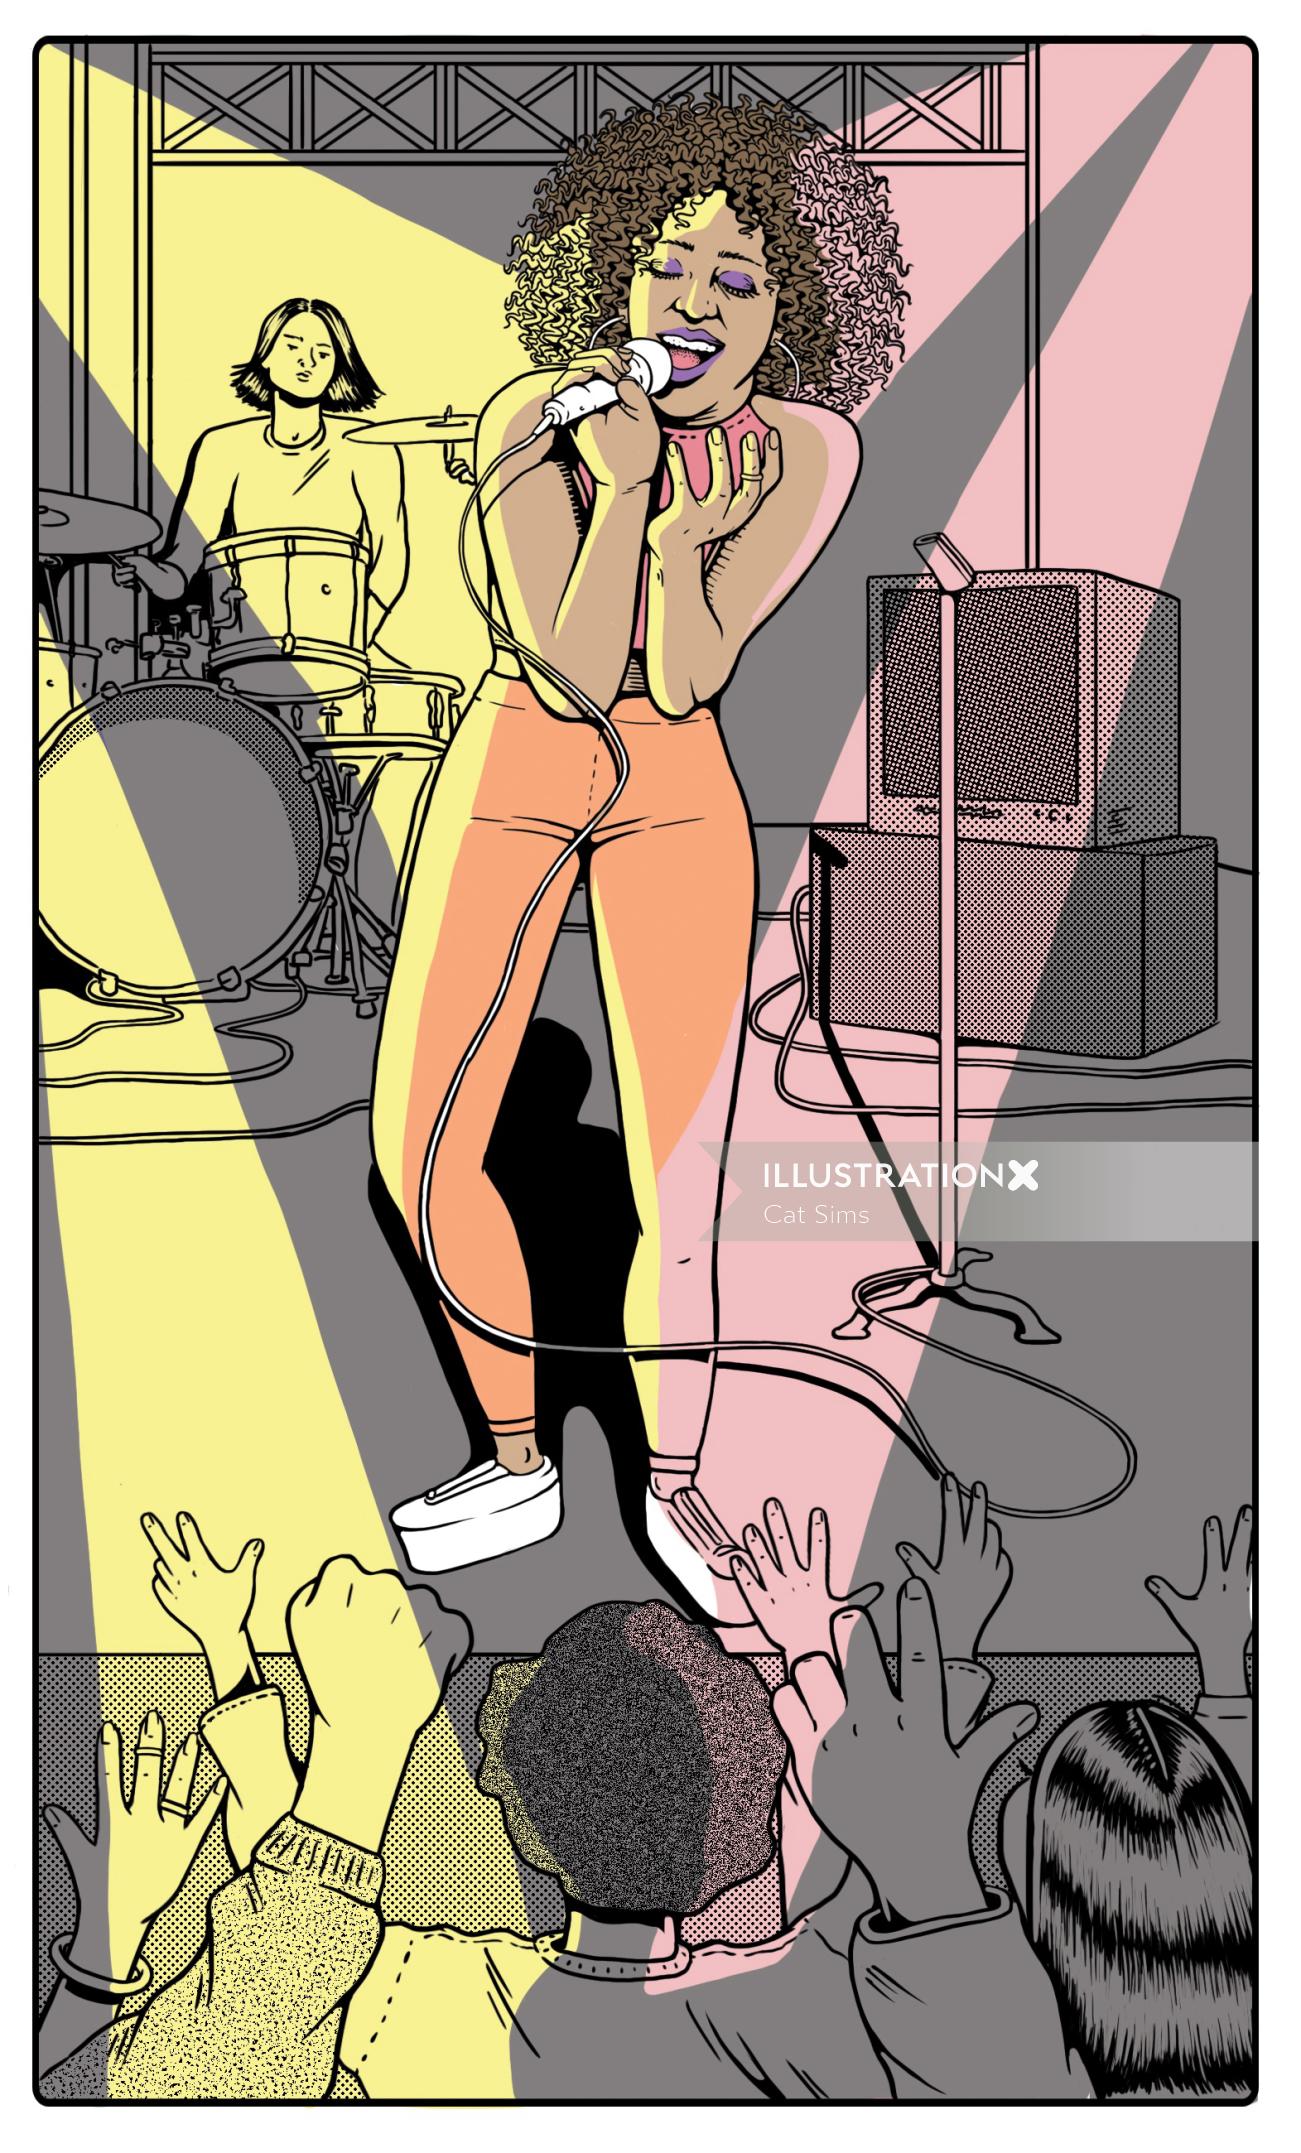 Comic illustration of lady singer